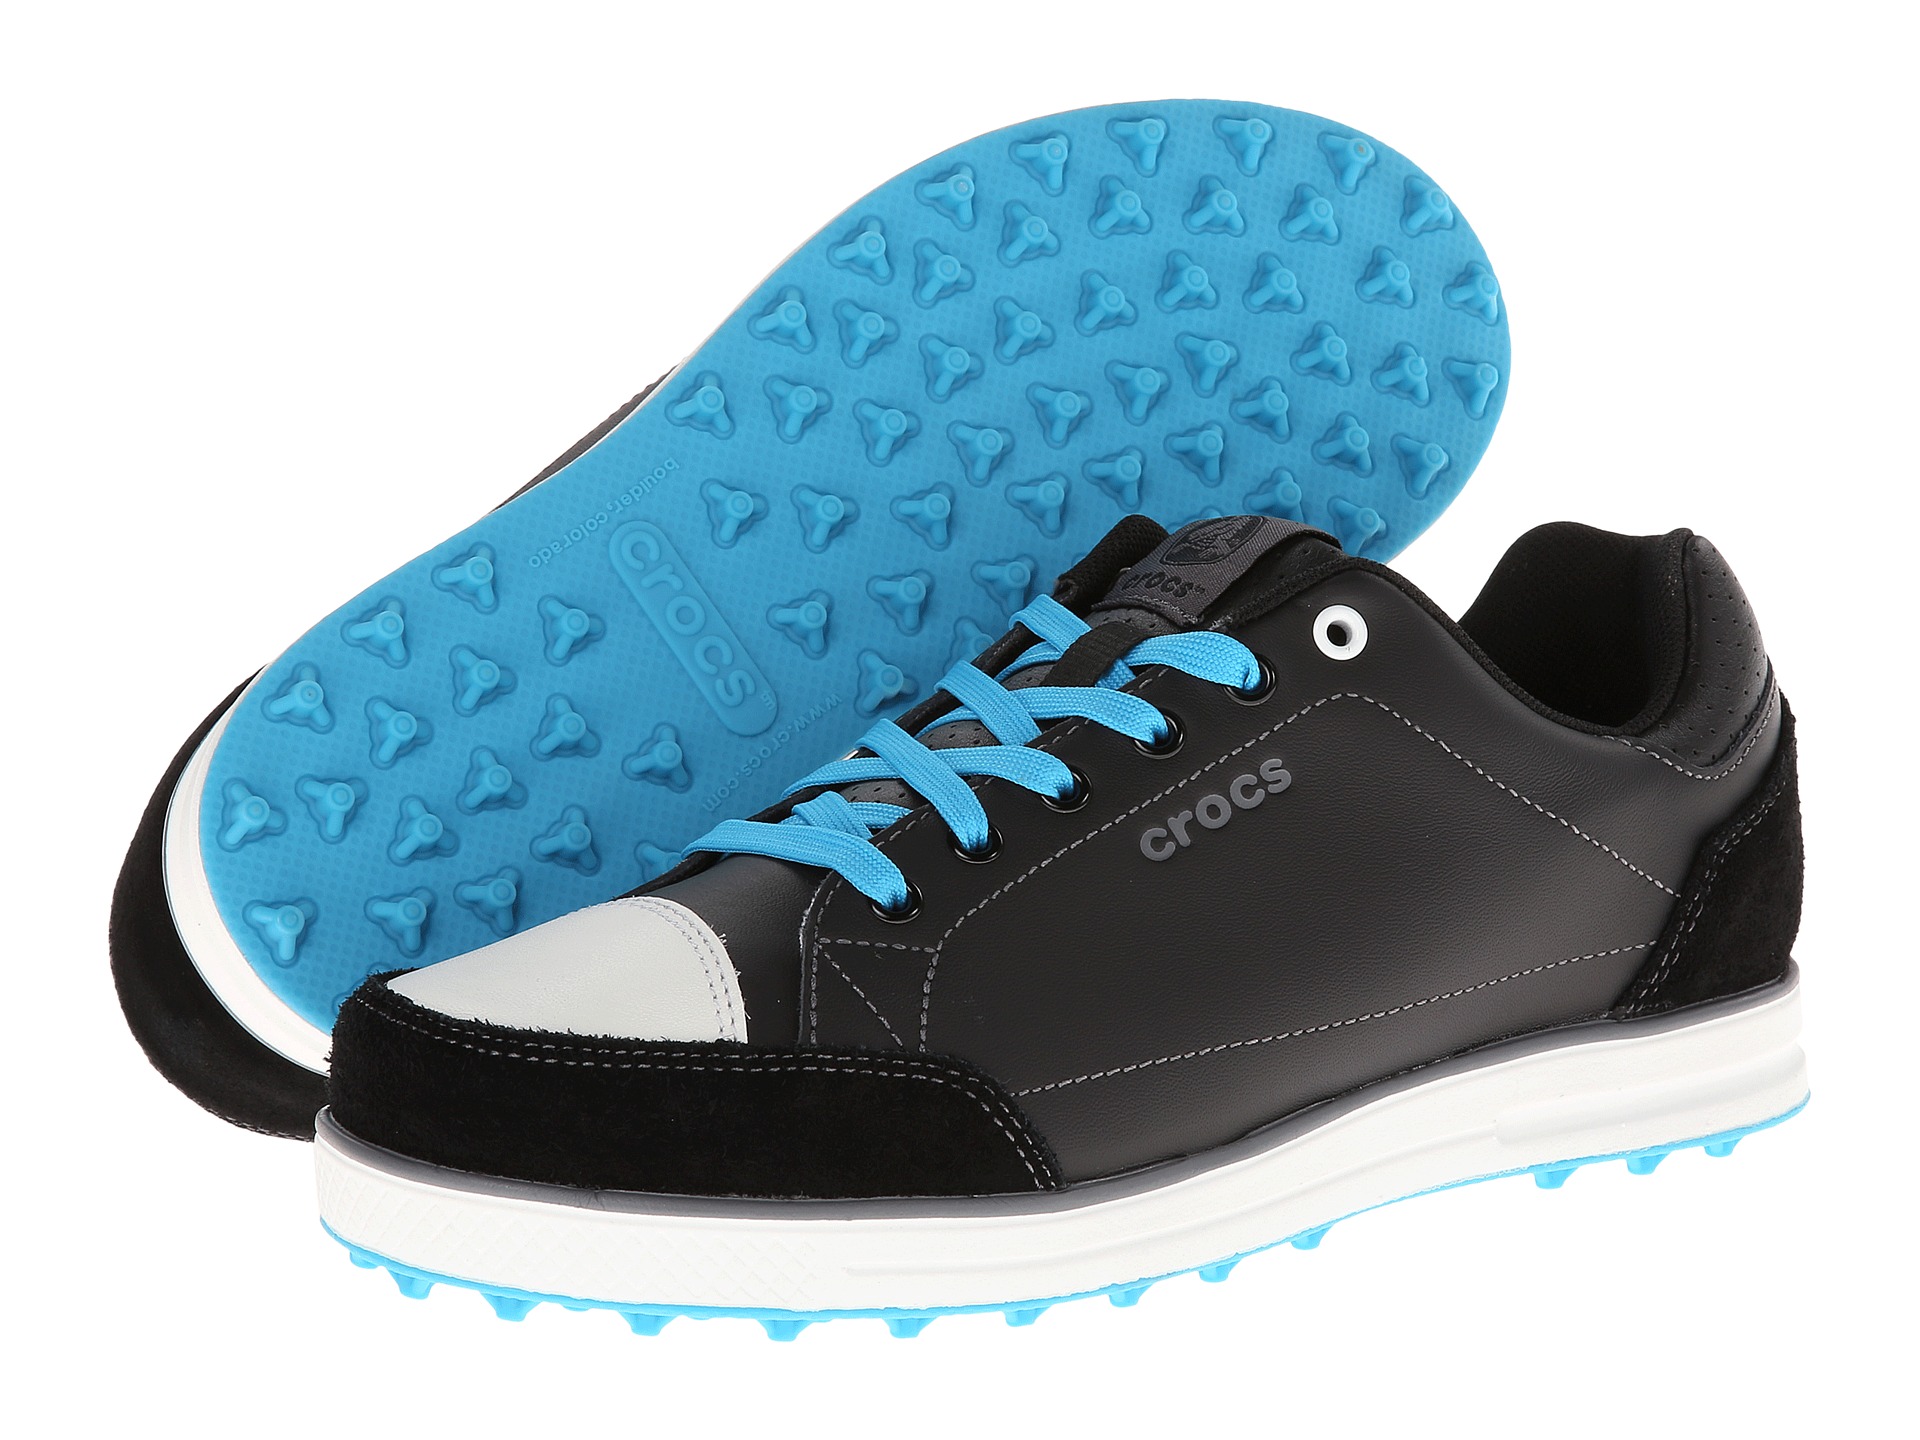 Crocs Karlson Golf Shoe M, Shoes | Shipped Free at Zappos